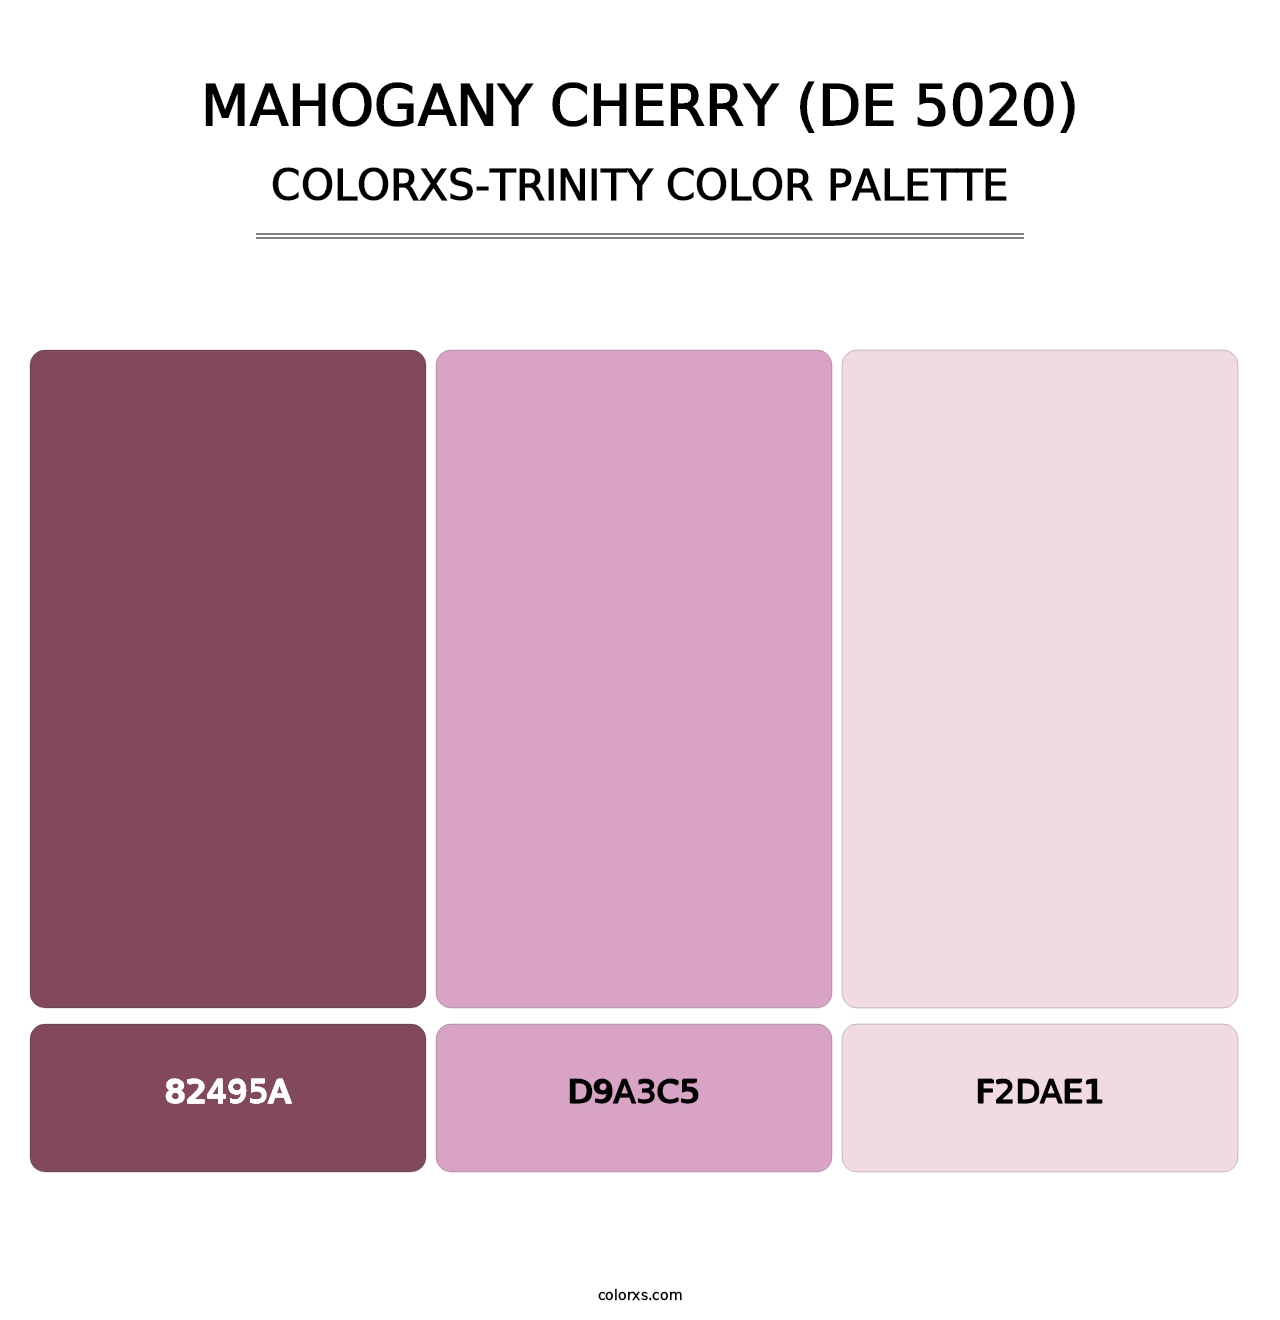 Mahogany Cherry (DE 5020) - Colorxs Trinity Palette